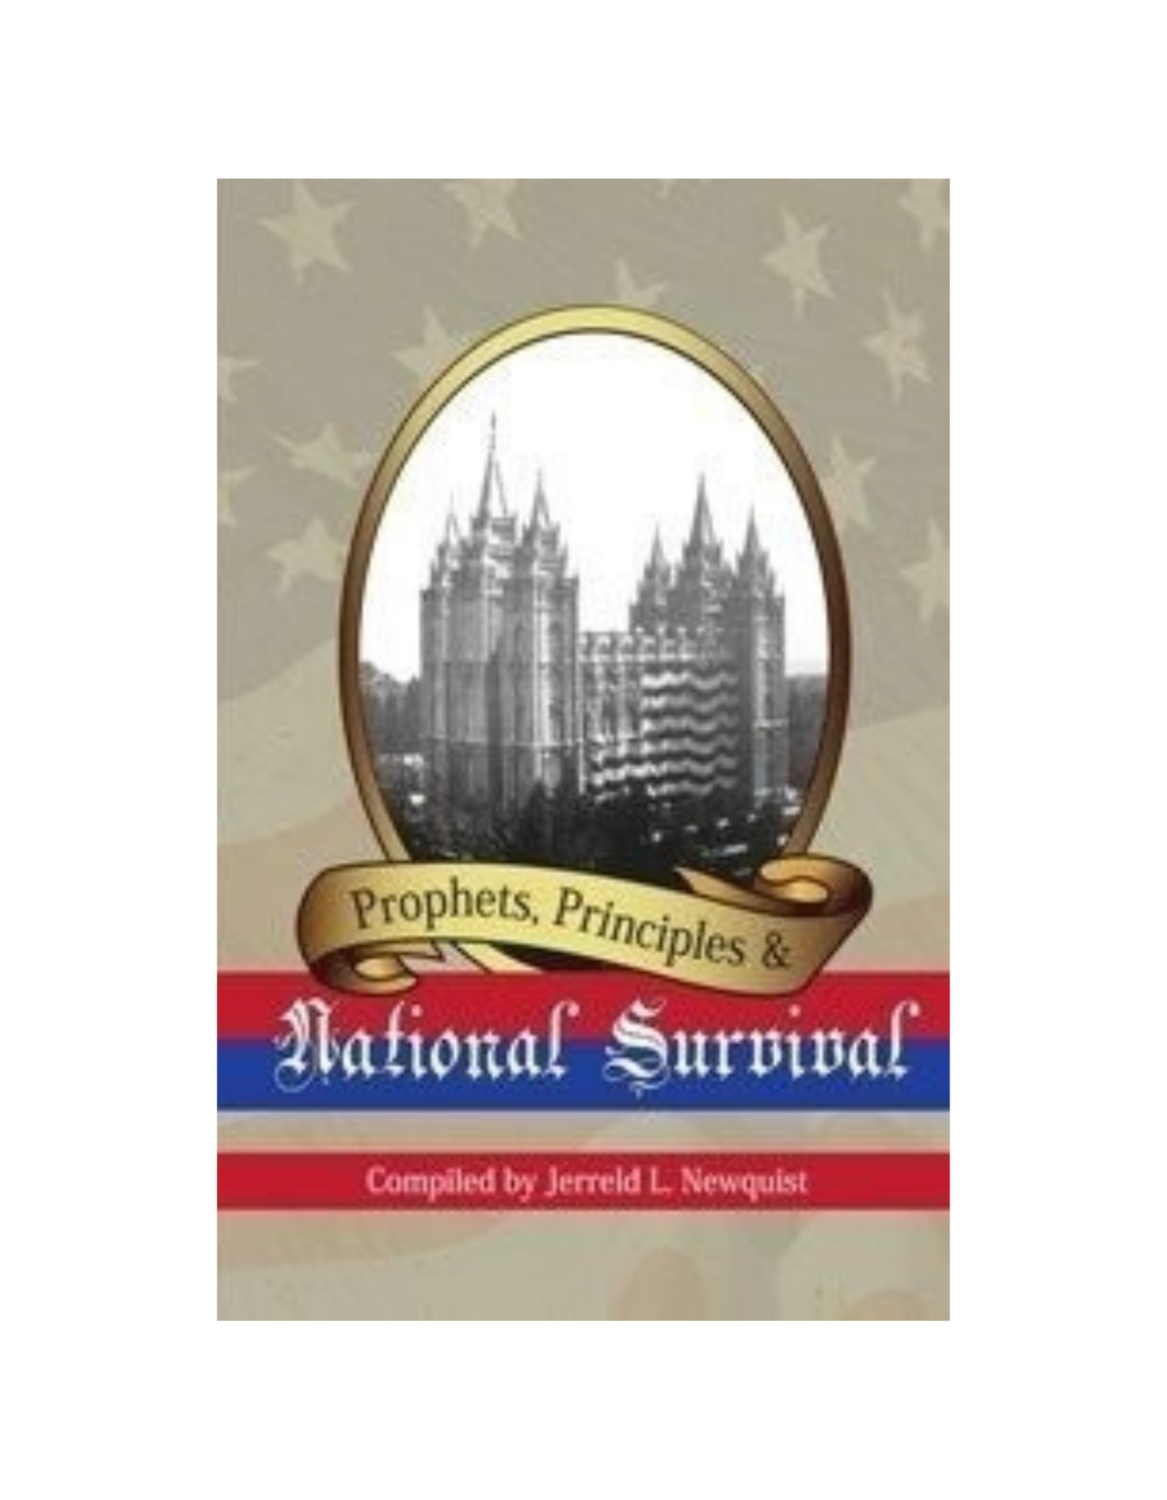 Prophets, Principles & National Survival (1964)